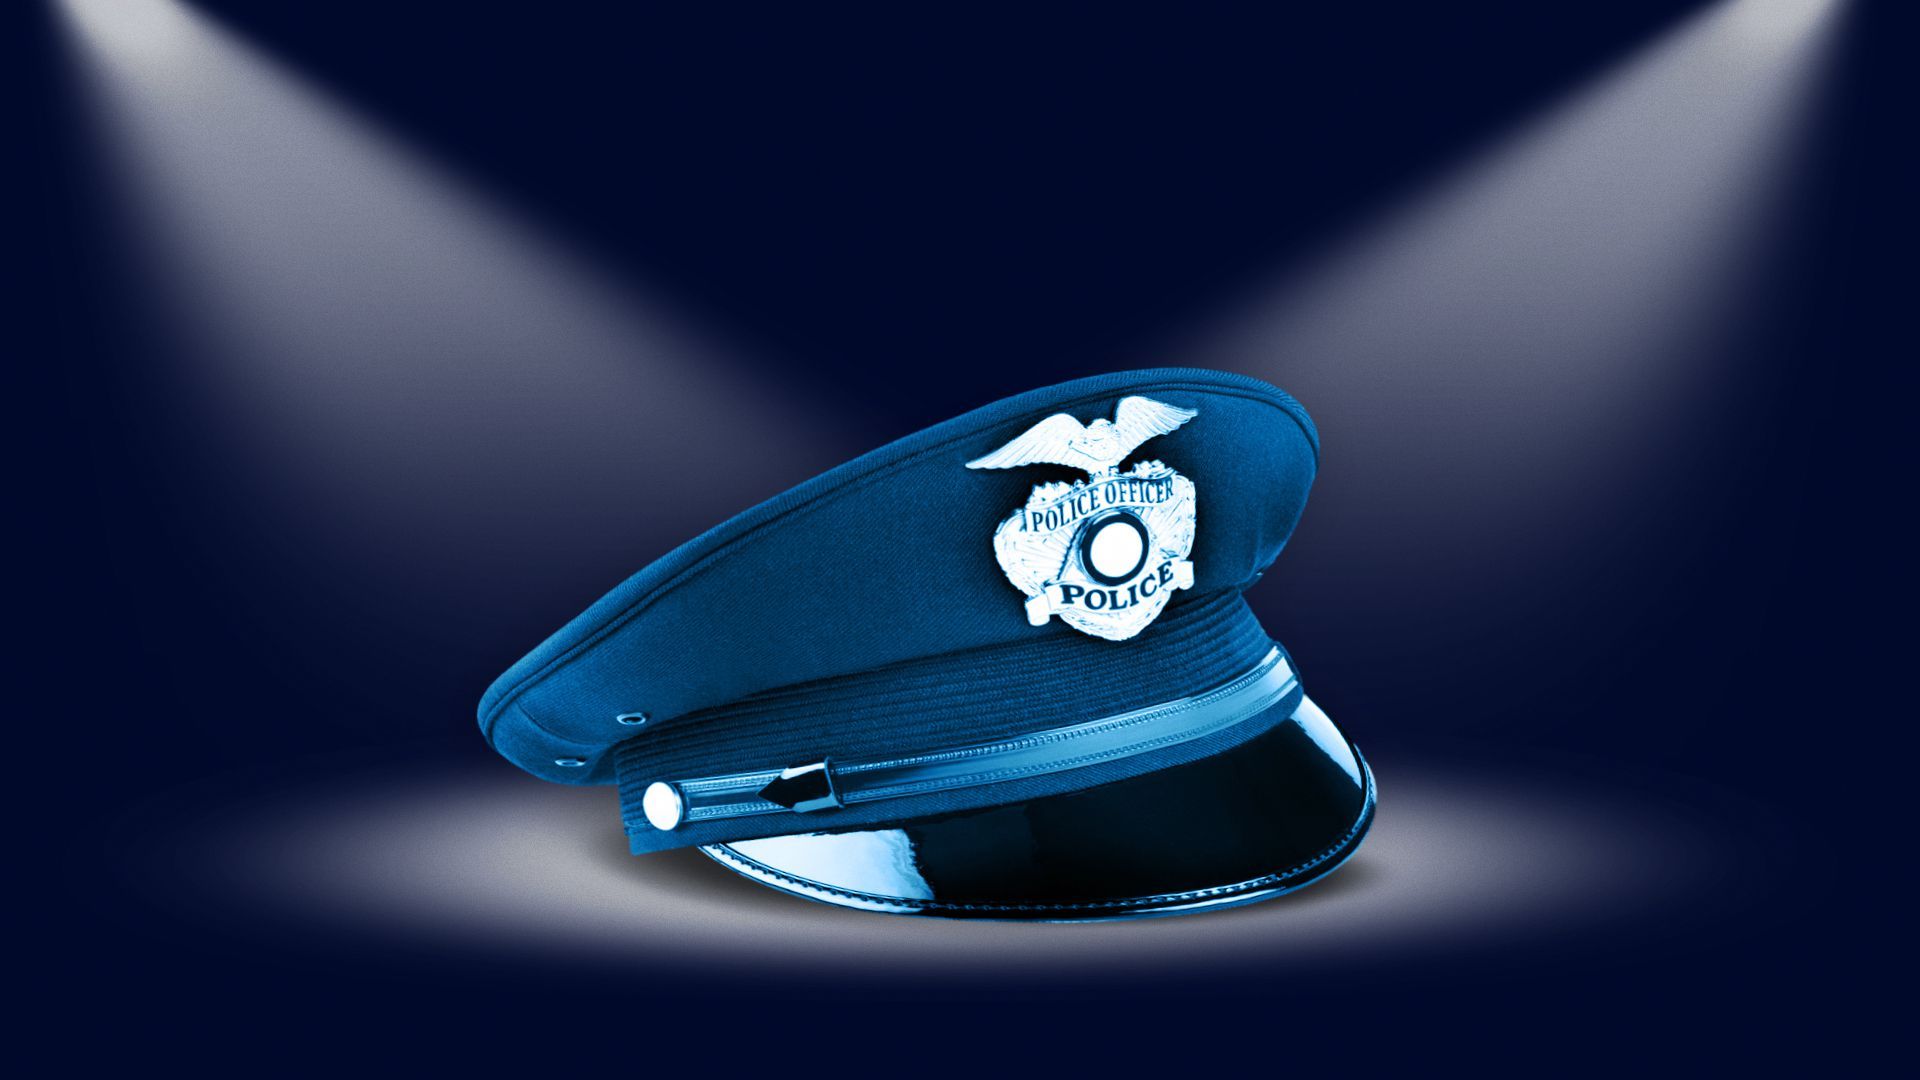 Illustration of a police cap on dark background under spotlights.